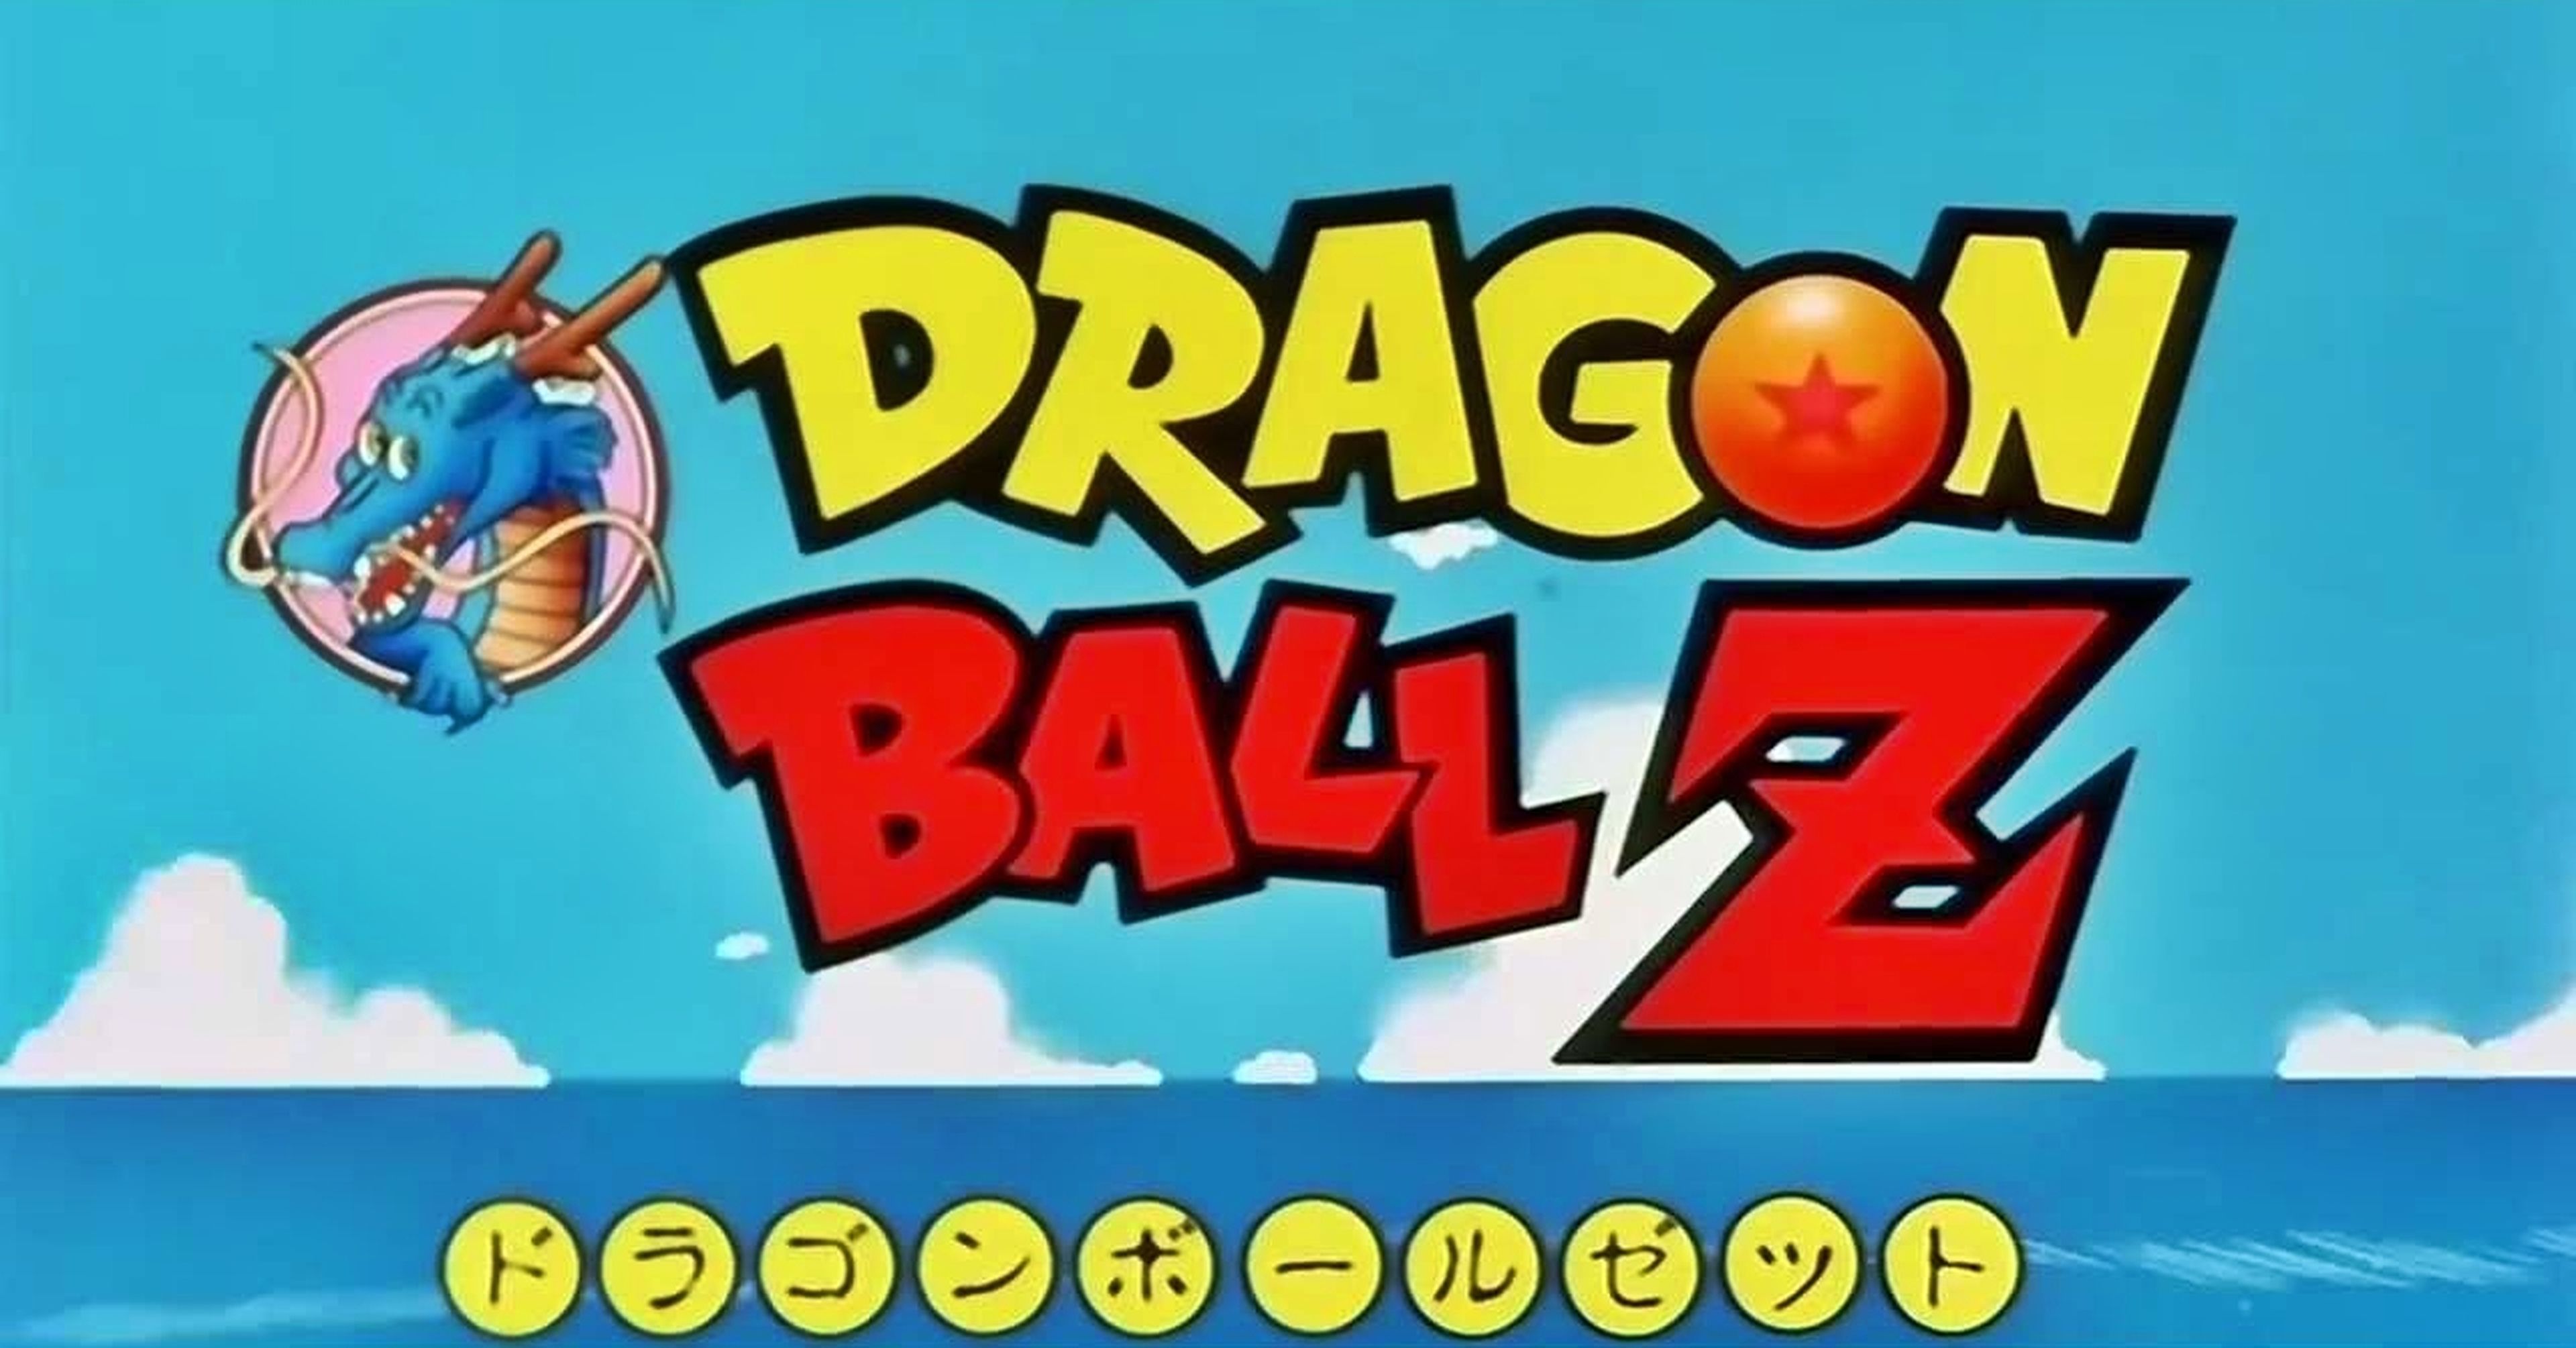 Dragon Ball Z logo opening